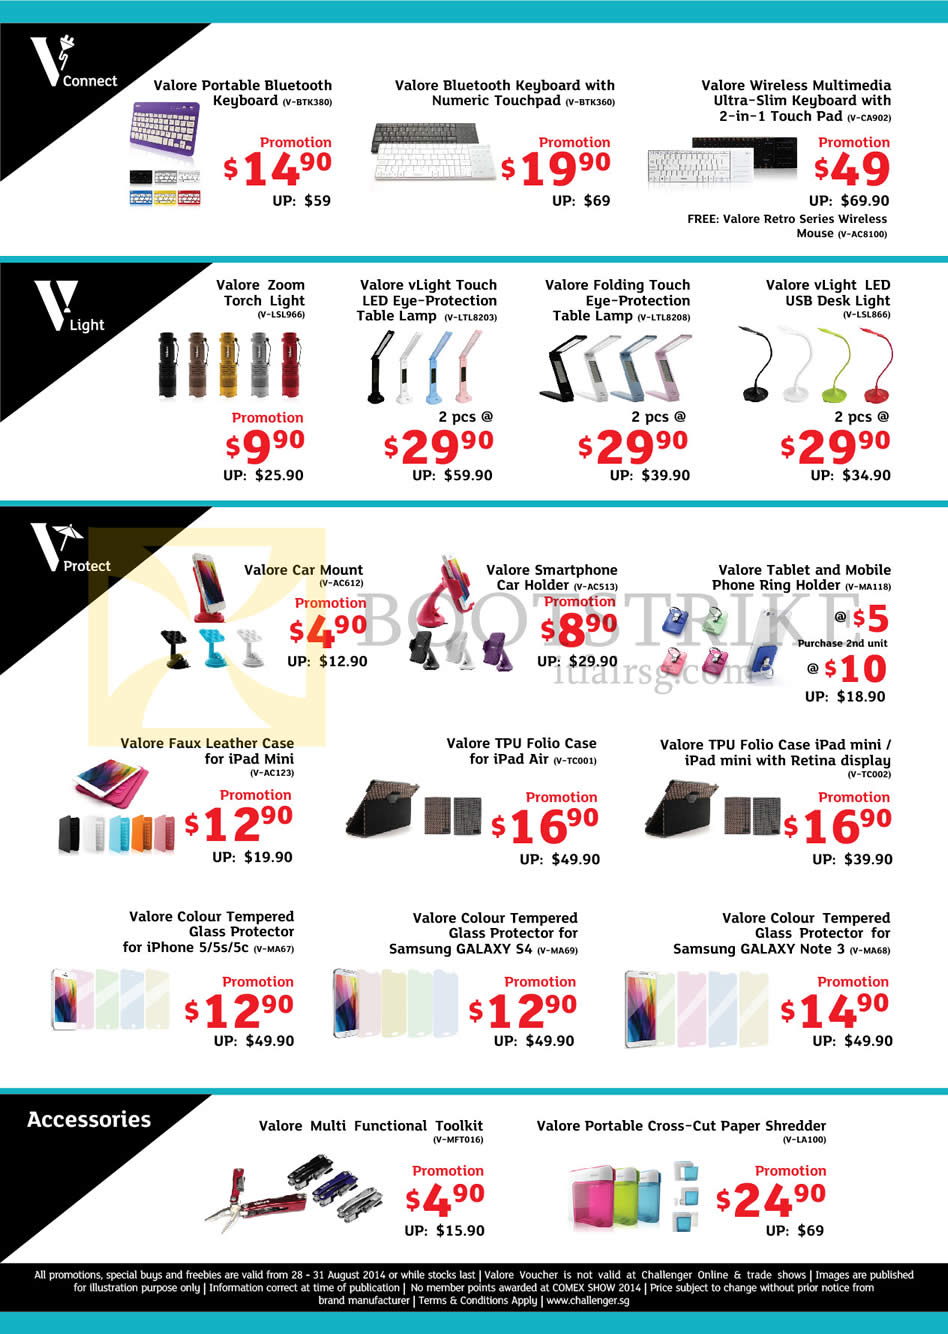 COMEX 2014 price list image brochure of Challenger Valore Accessories Keyboard, Torch Light, Lamp, Case, Paper Shredder, Car Holder